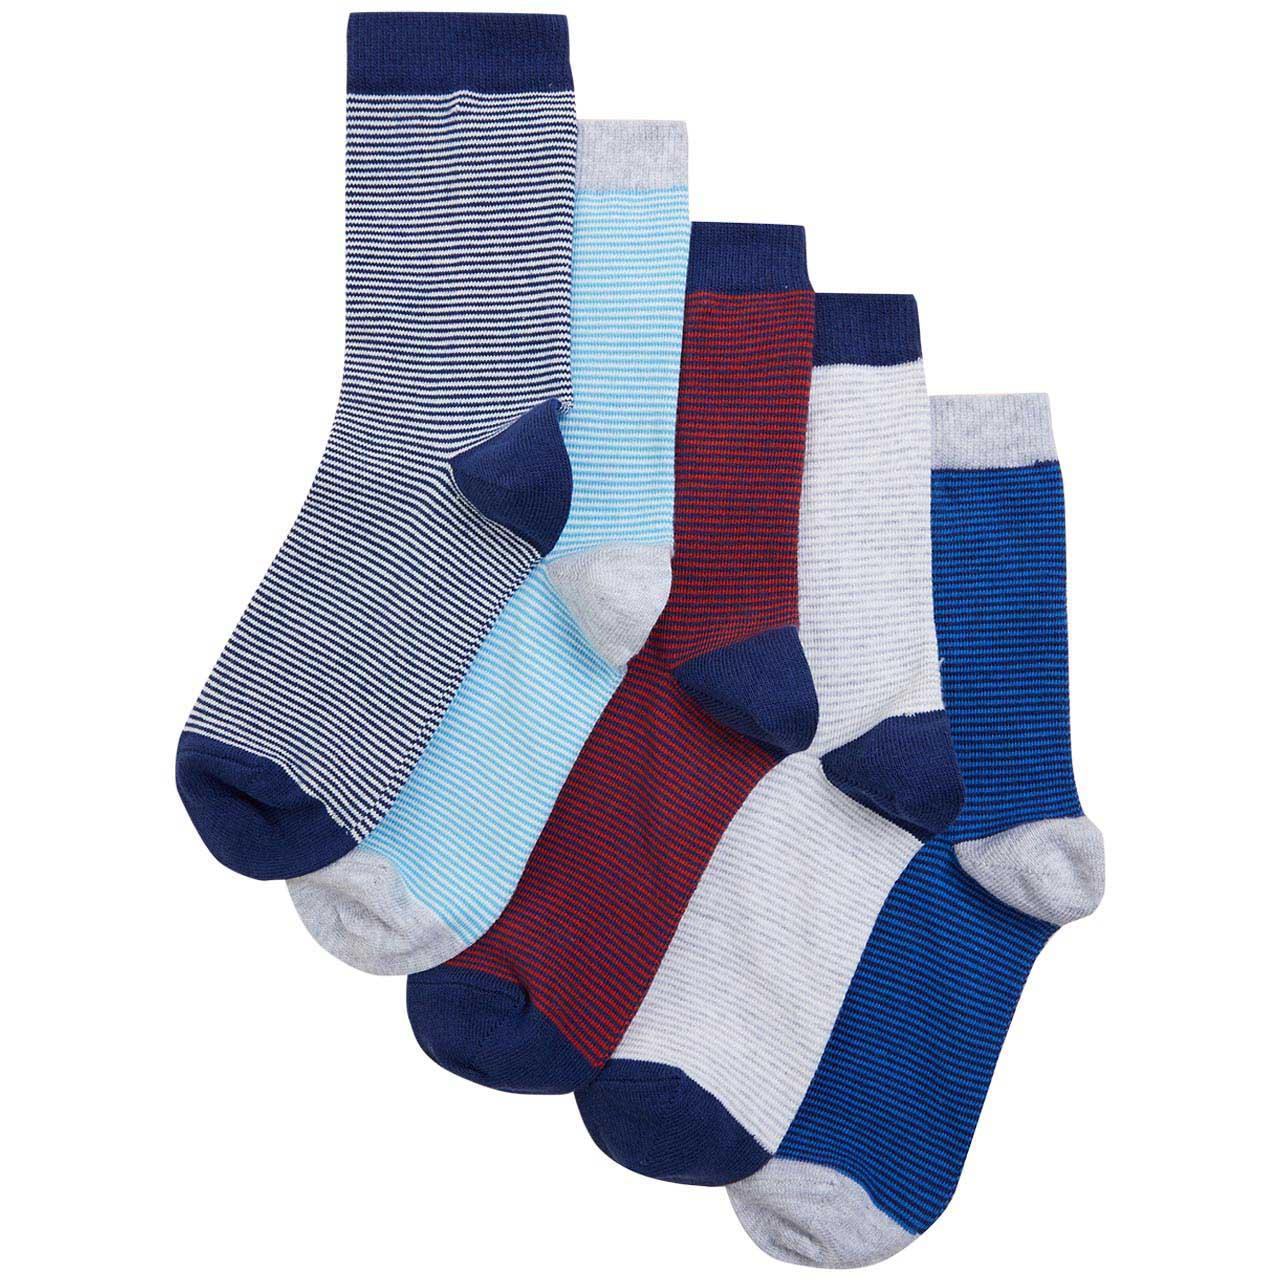 M&S Kids Cotton Rich Striped Socks, 5 pack, 6-8